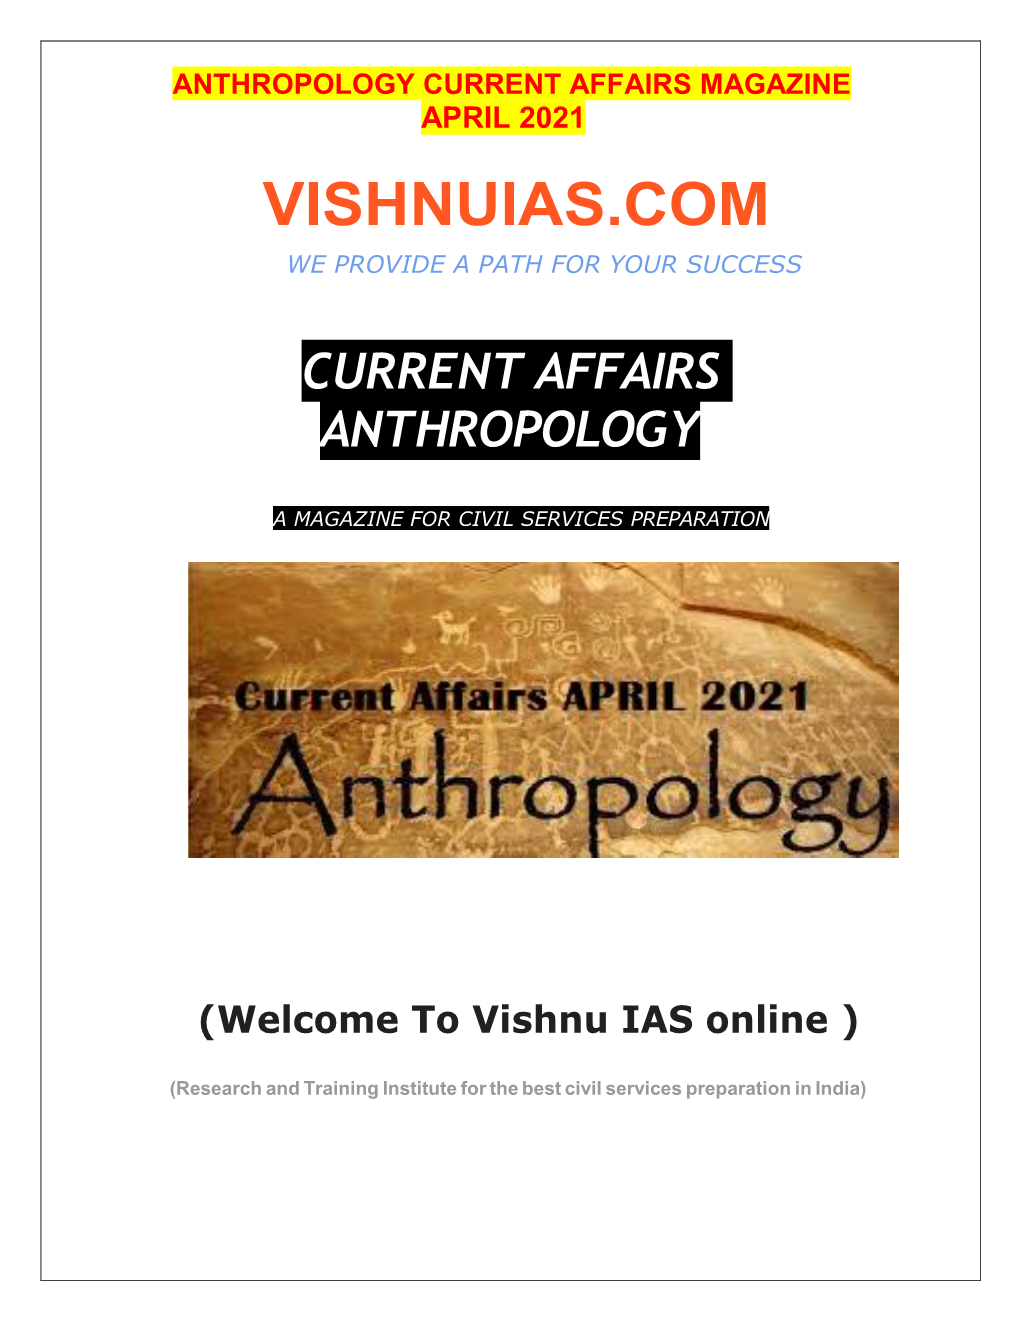 Anthropology Current Affairs Magazine April 2021